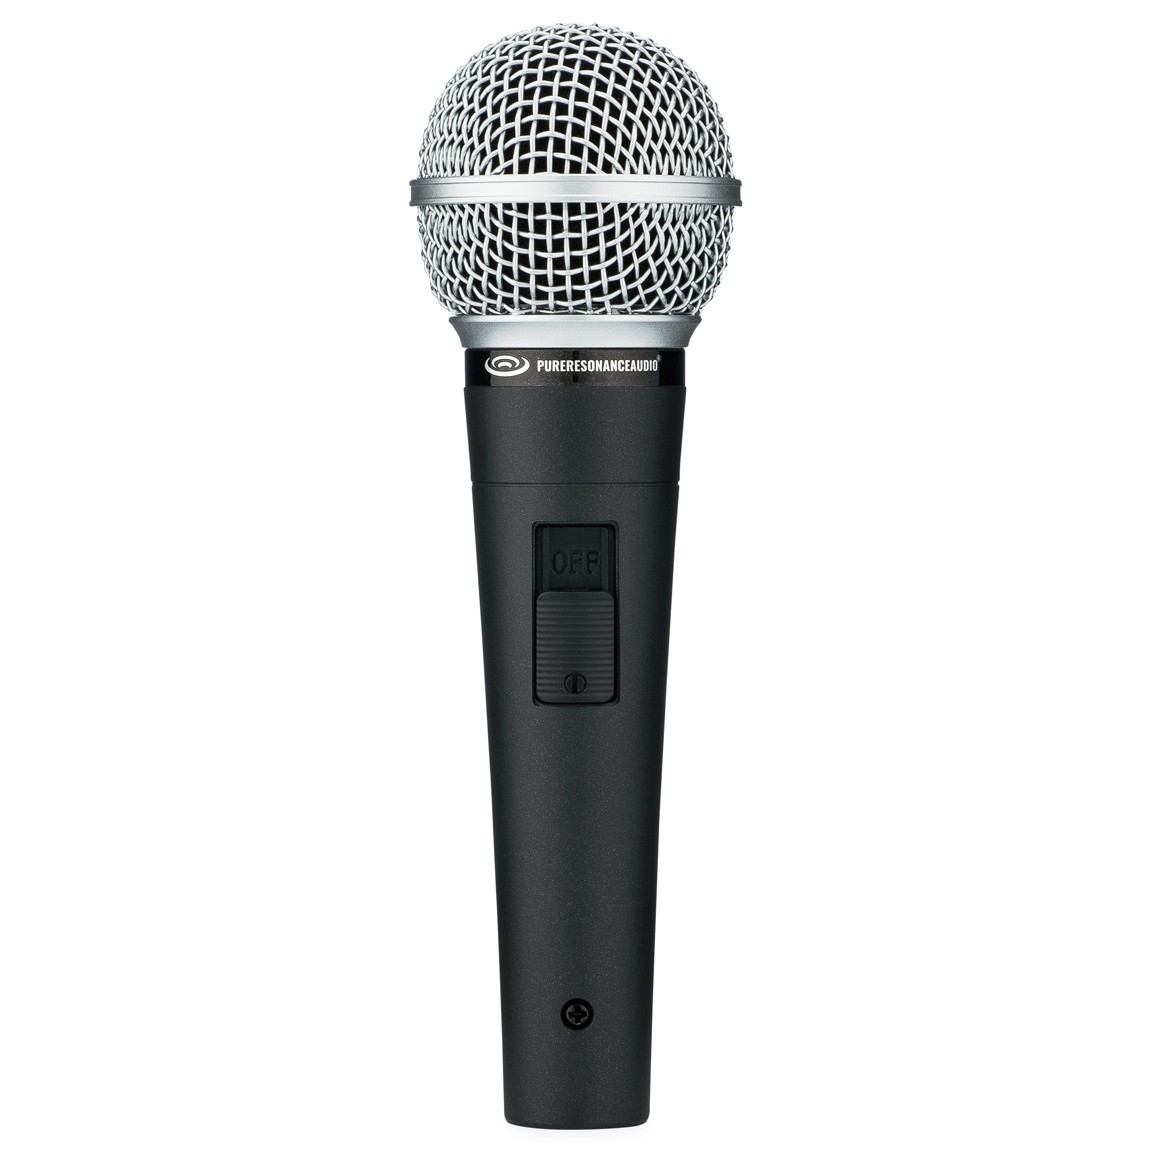 Pure Resonance Audio UC1S Dynamic Vocal Microphone